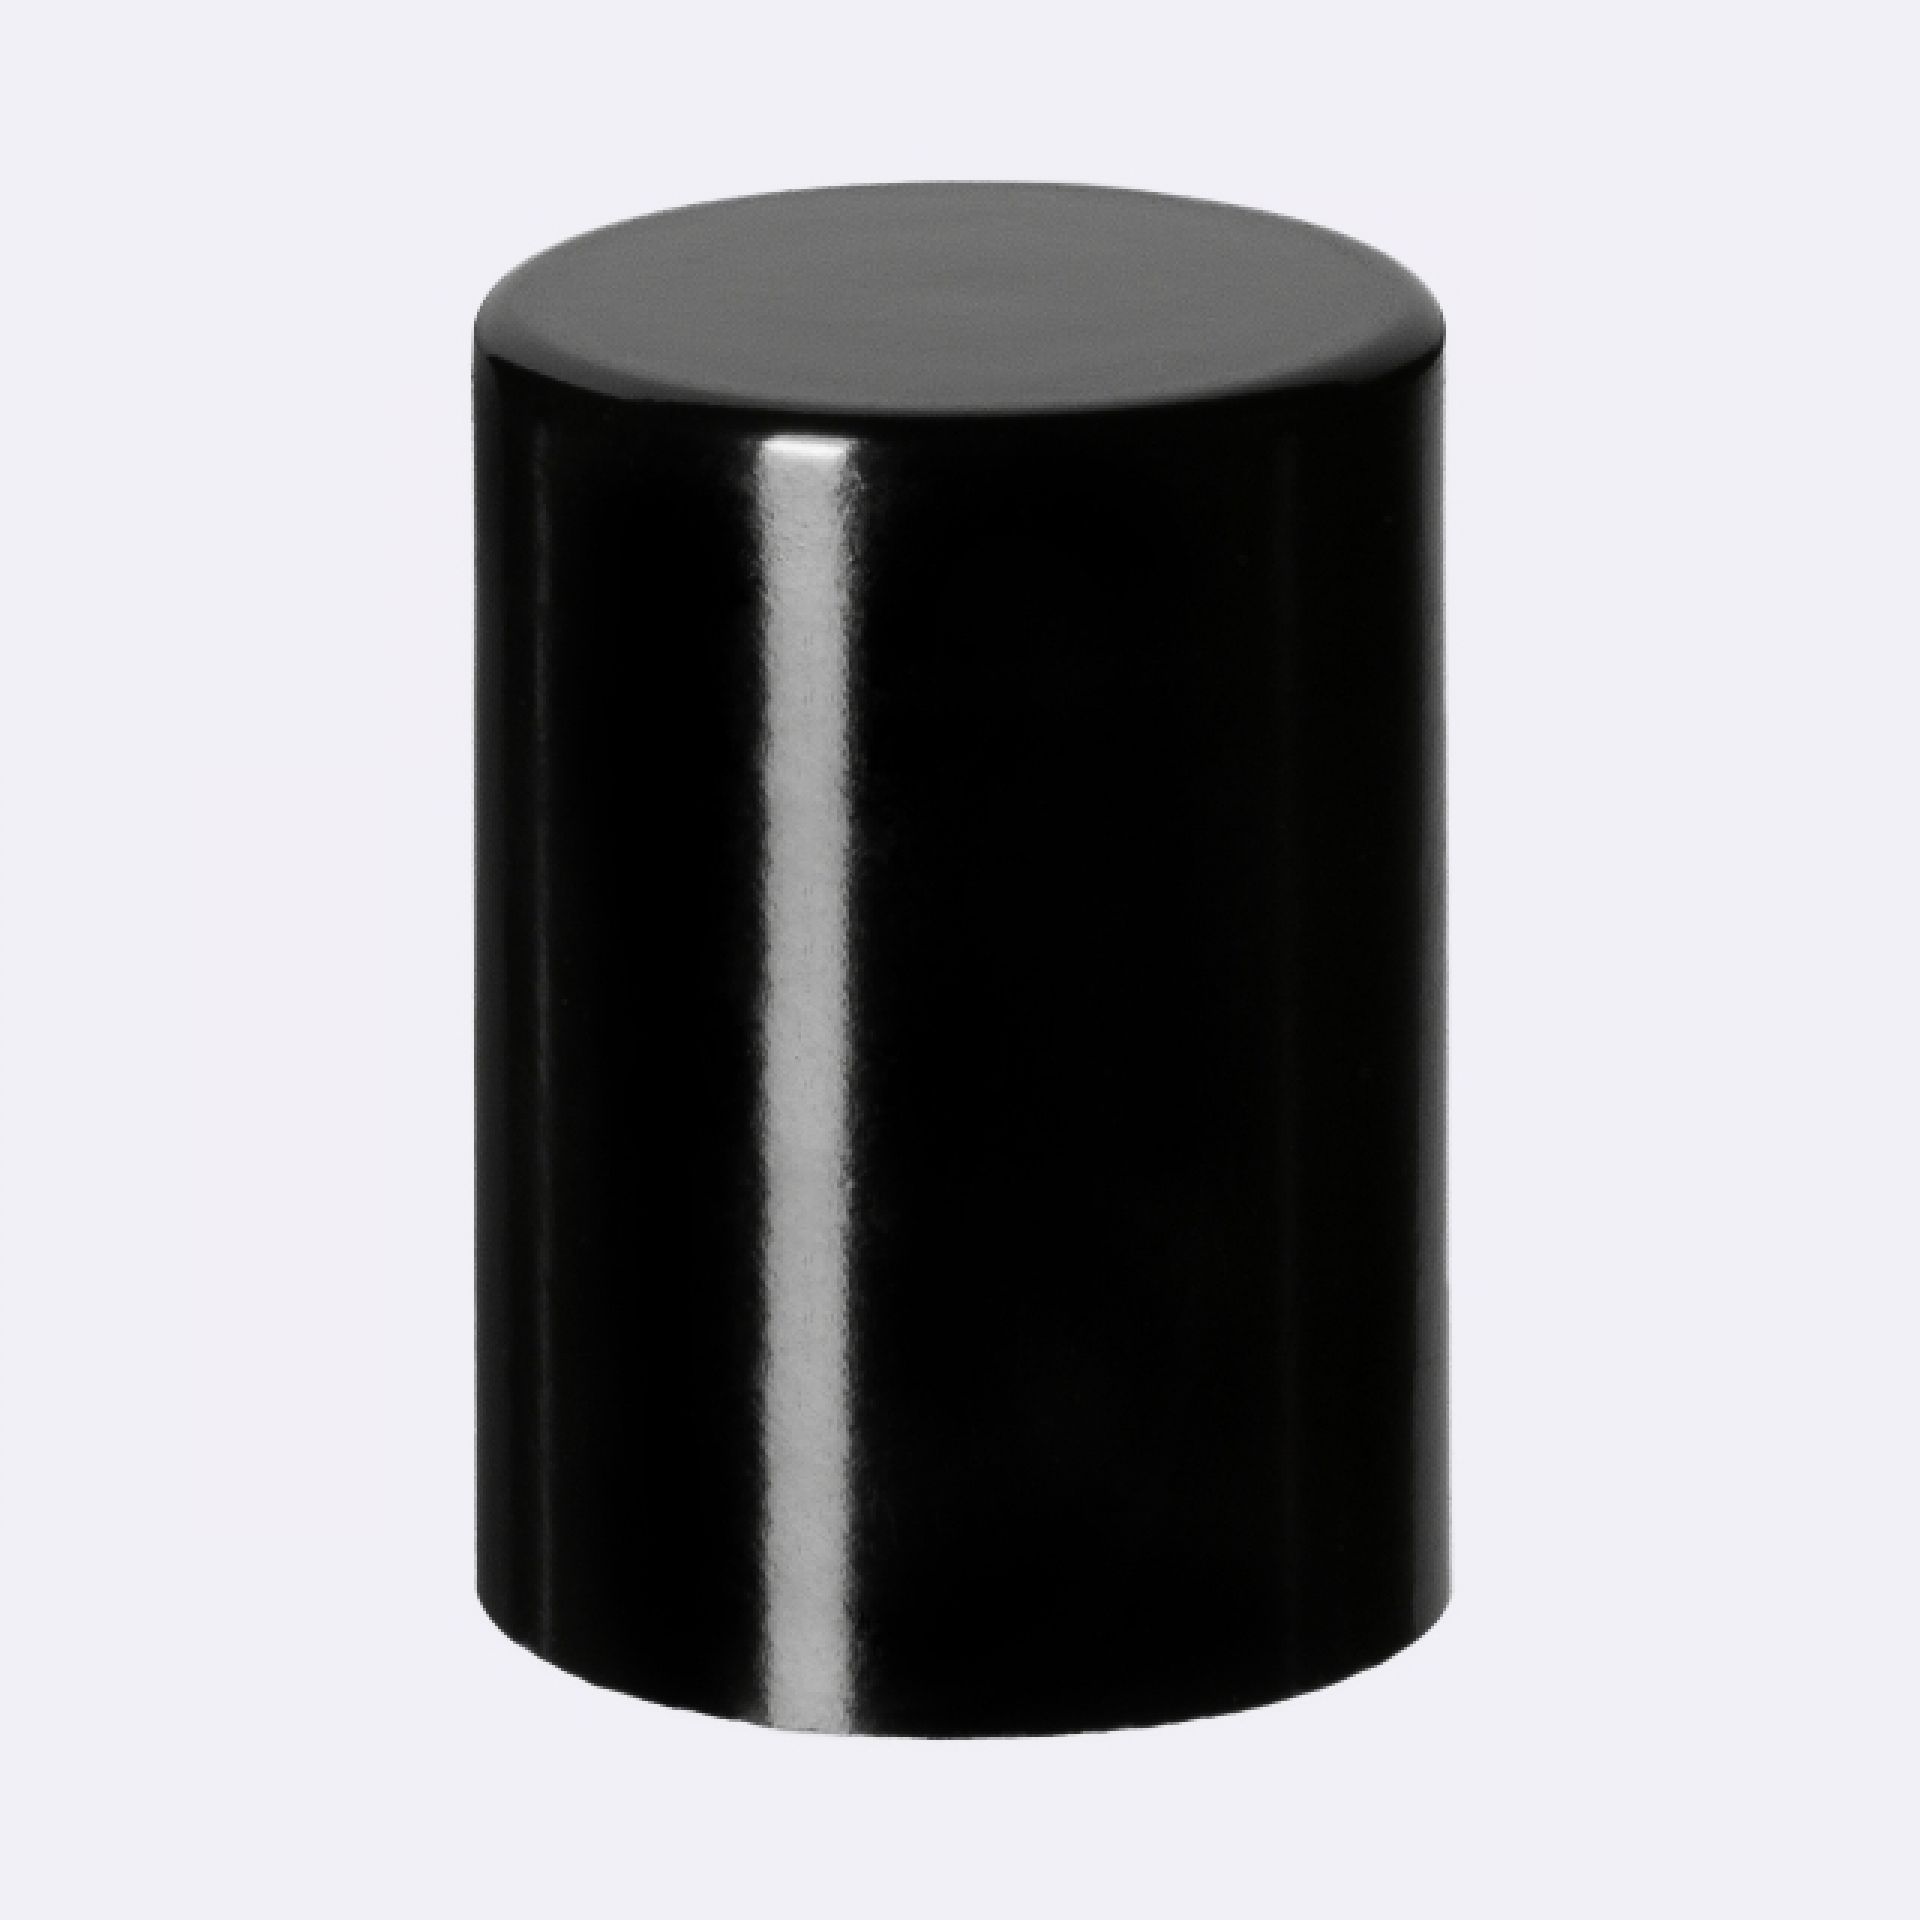 Roll-on cap DIN18, Urea, natural fitment, matt plastic ball, black cap (Orion)